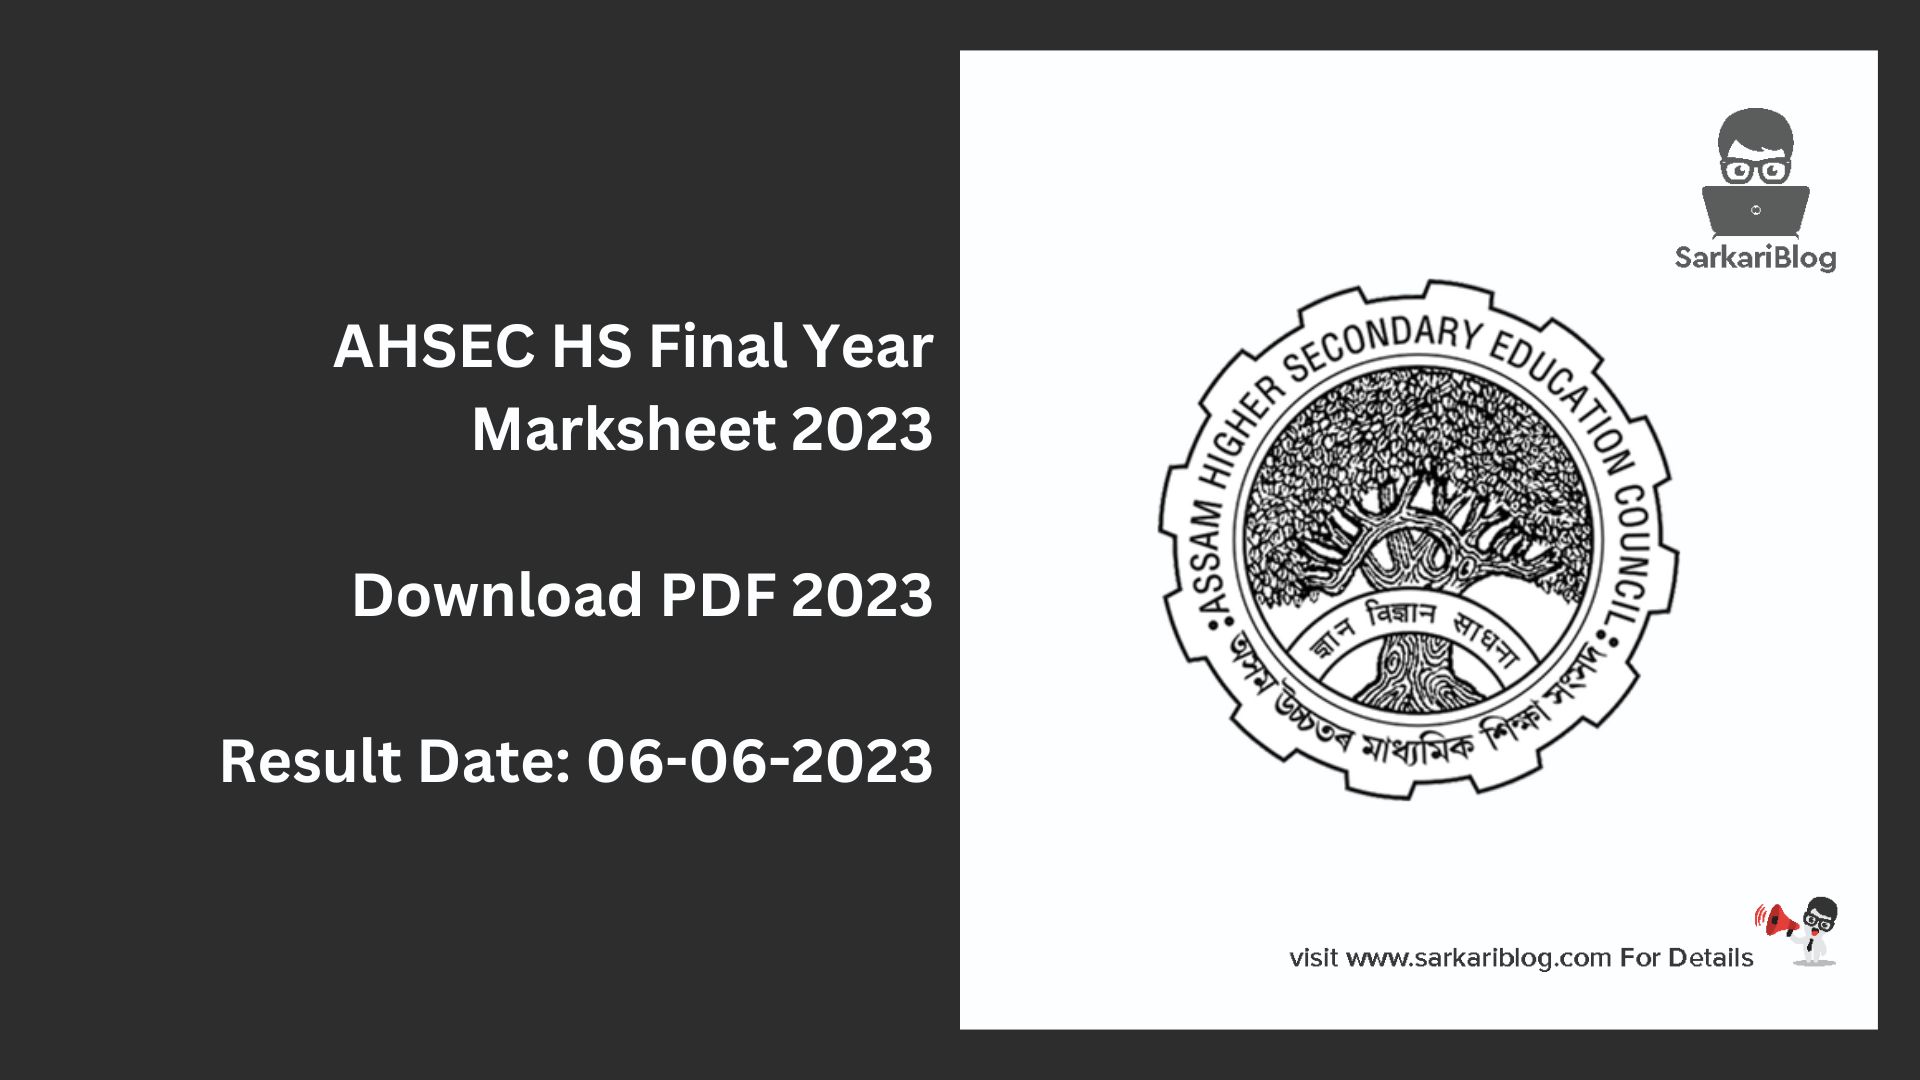 AHSEC HS Final Year Marksheet 2023